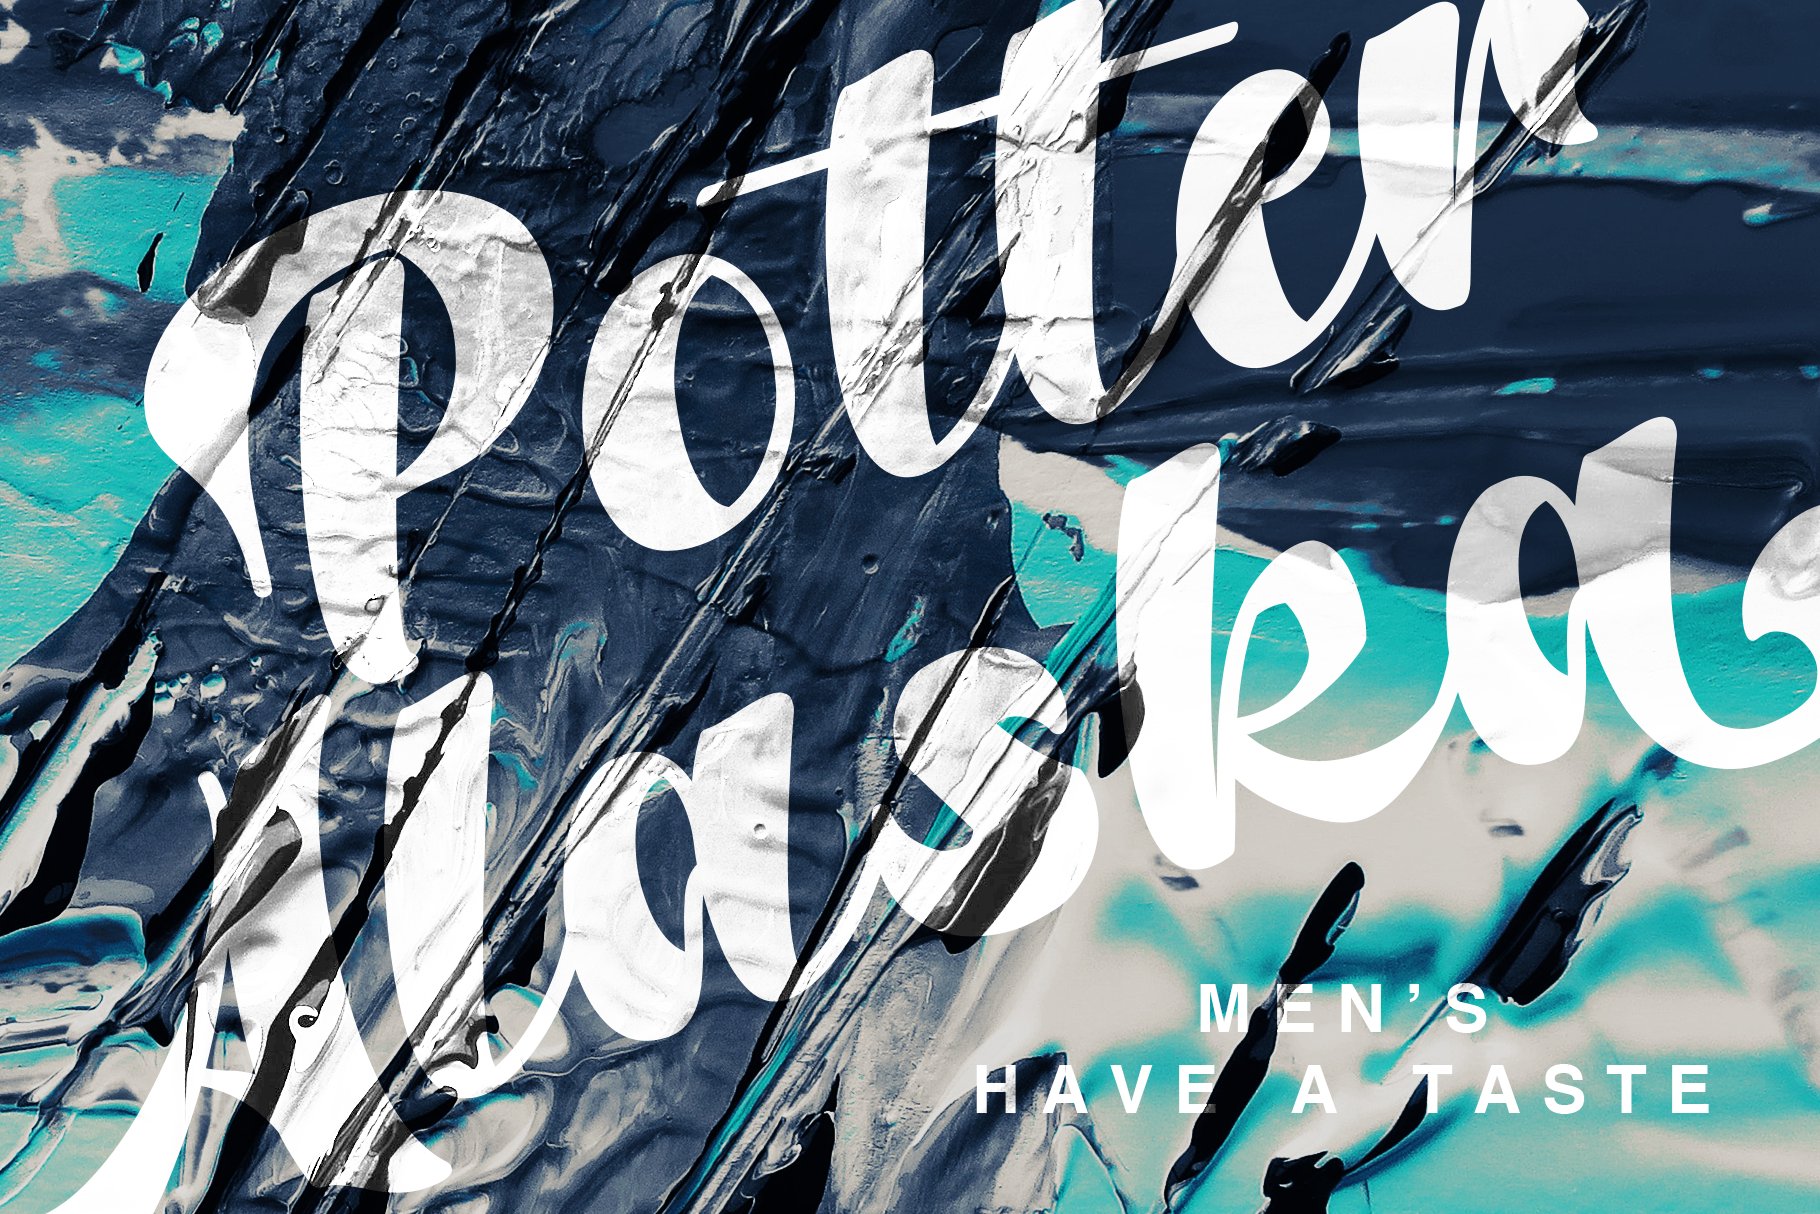 Potter Alaska cover image.